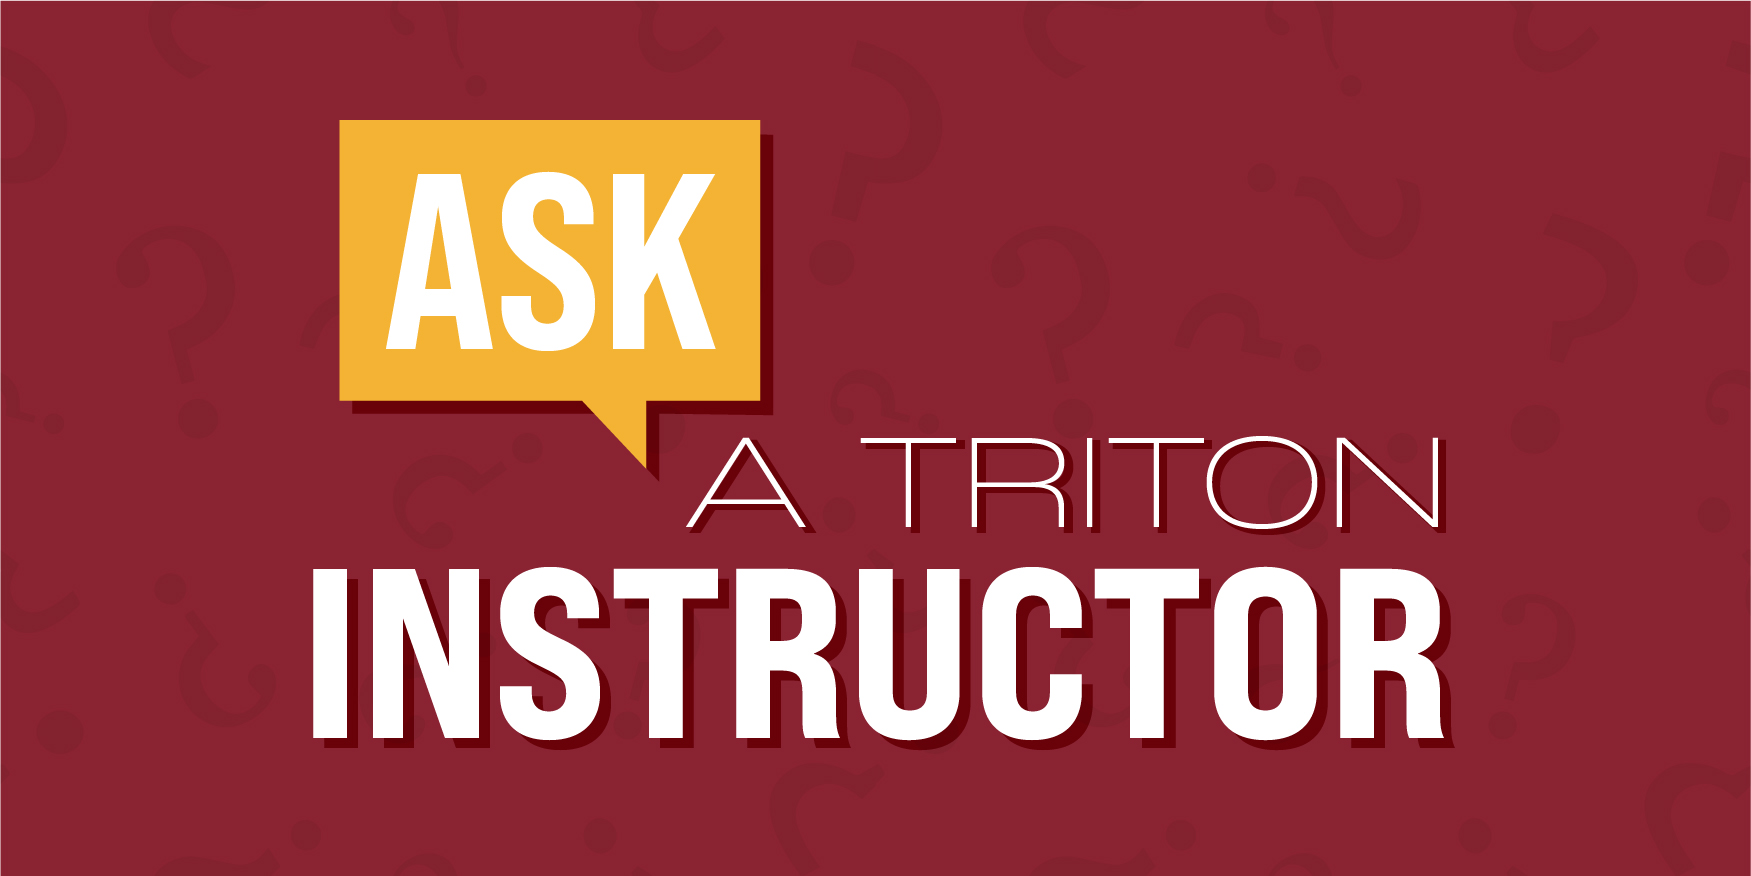 Ask a Triton Instructor